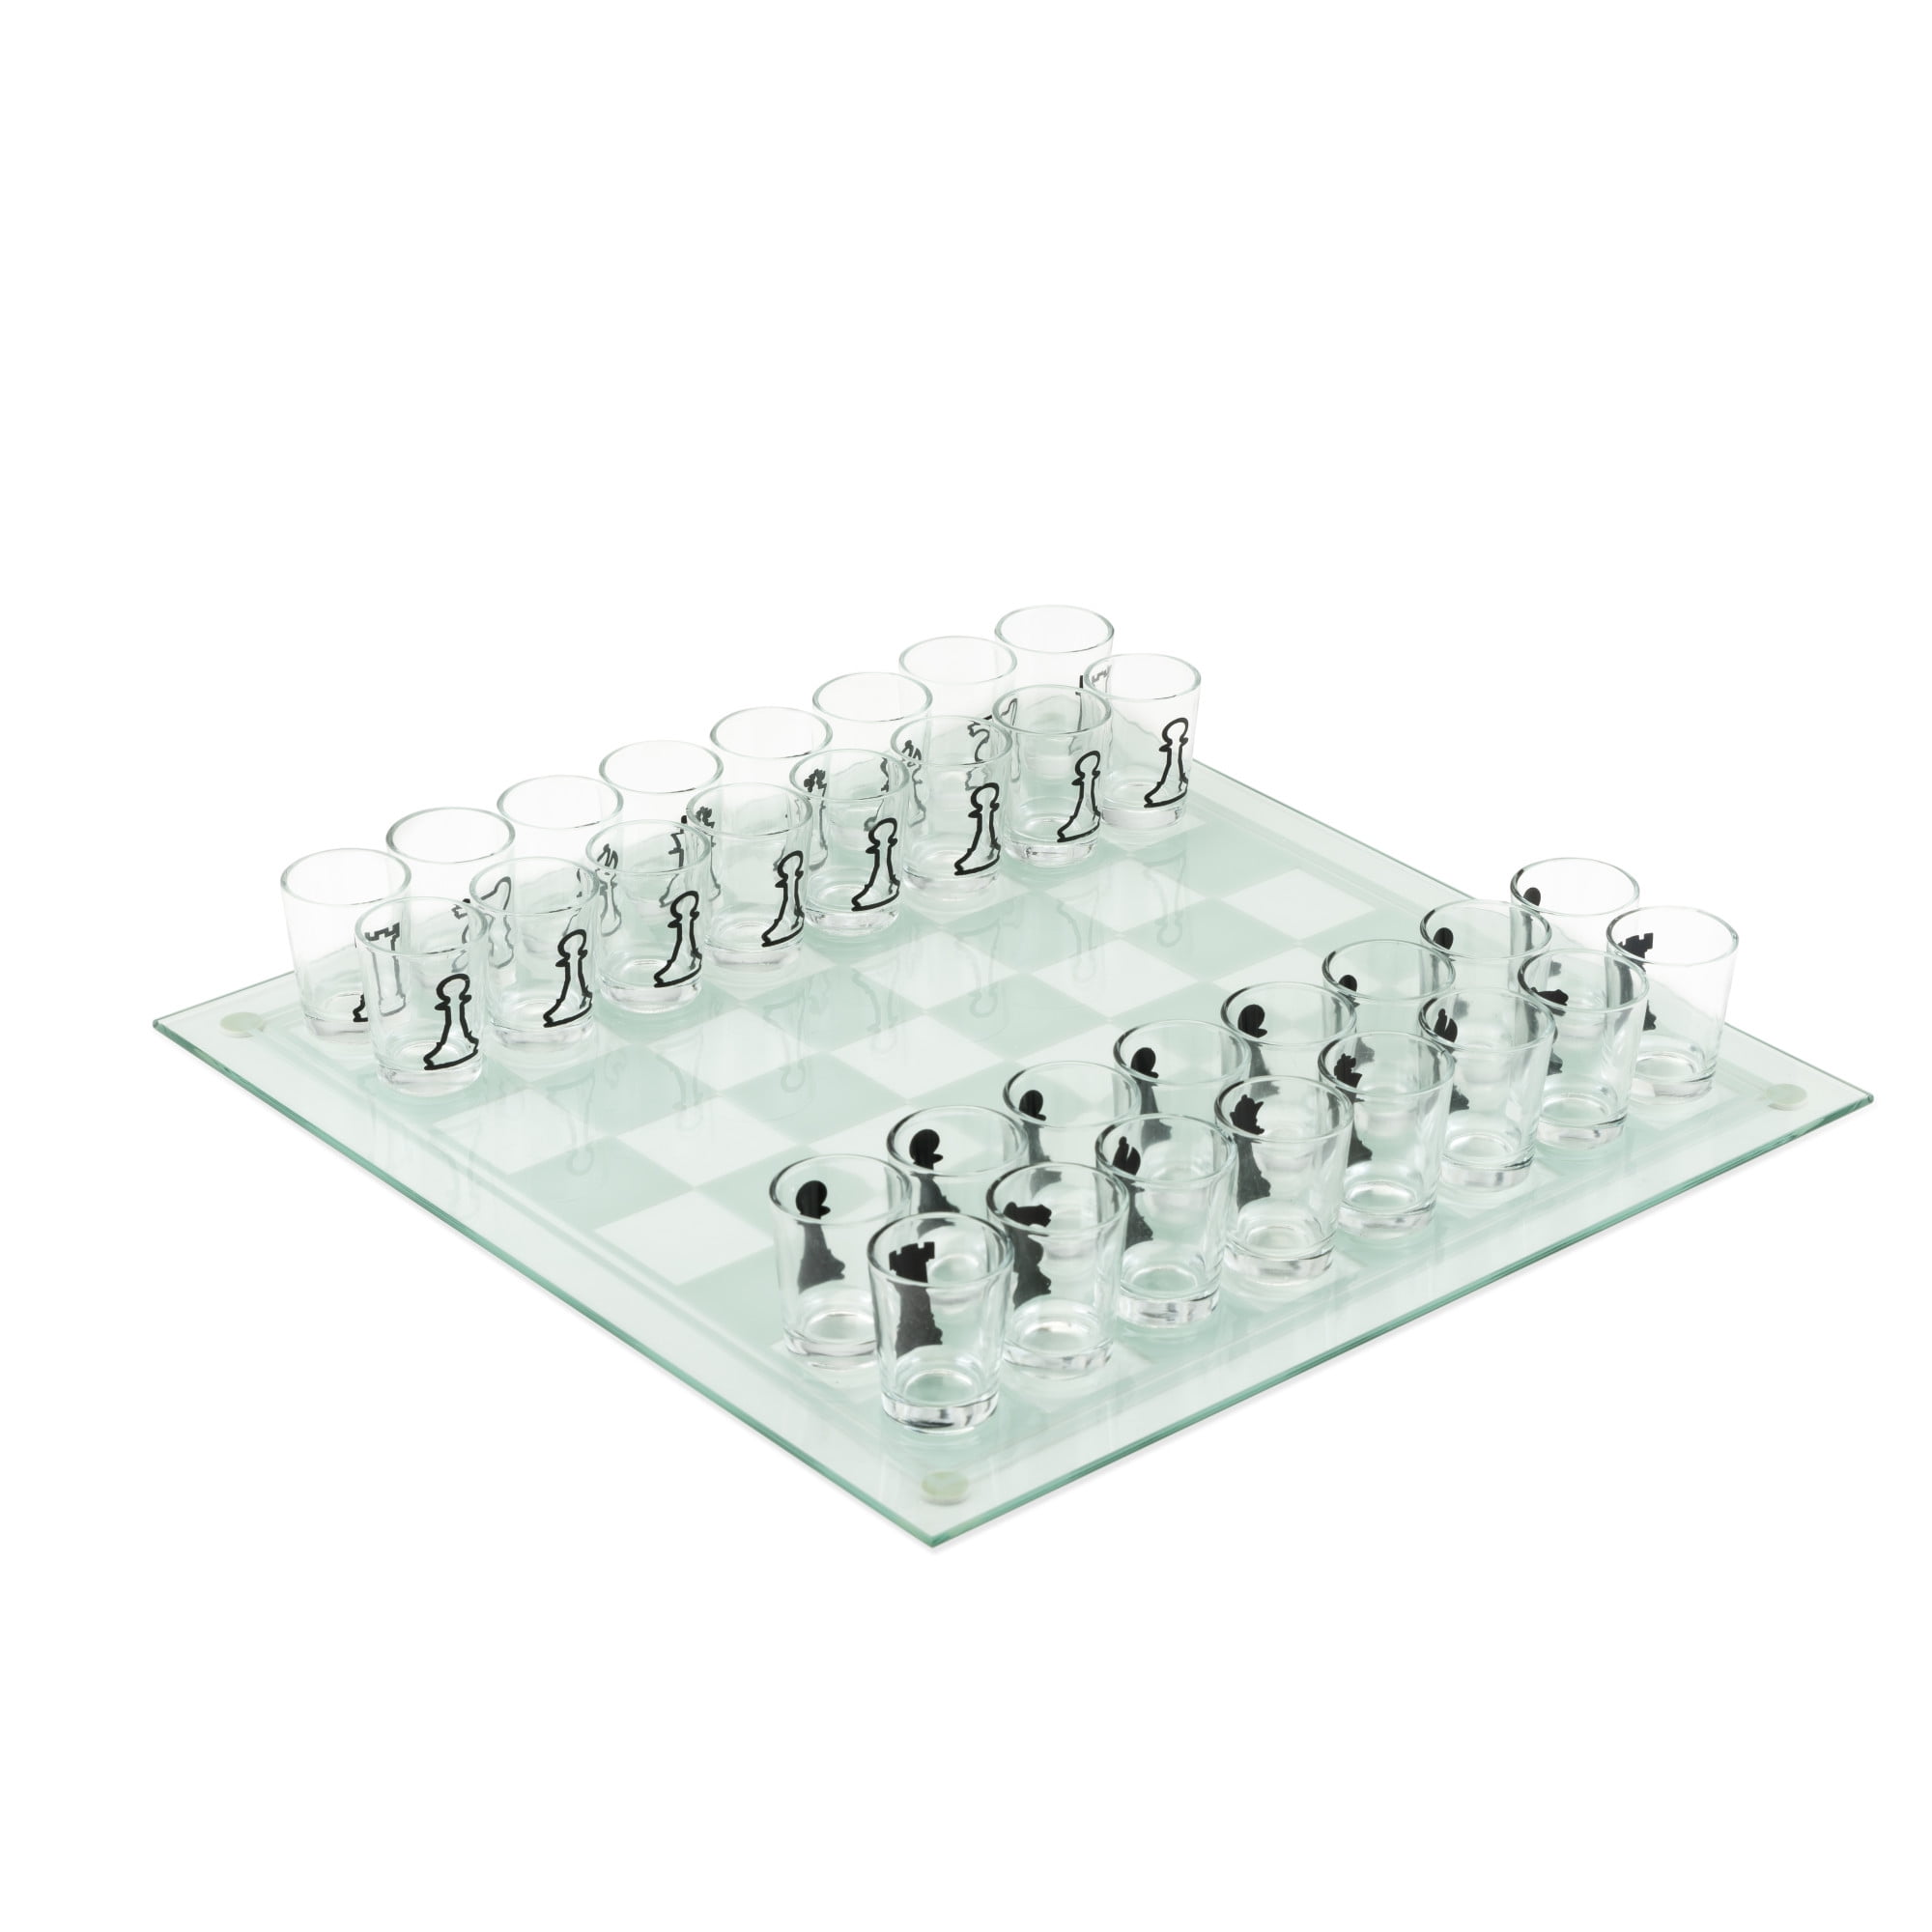 Chess Games - ChessBox Free Games